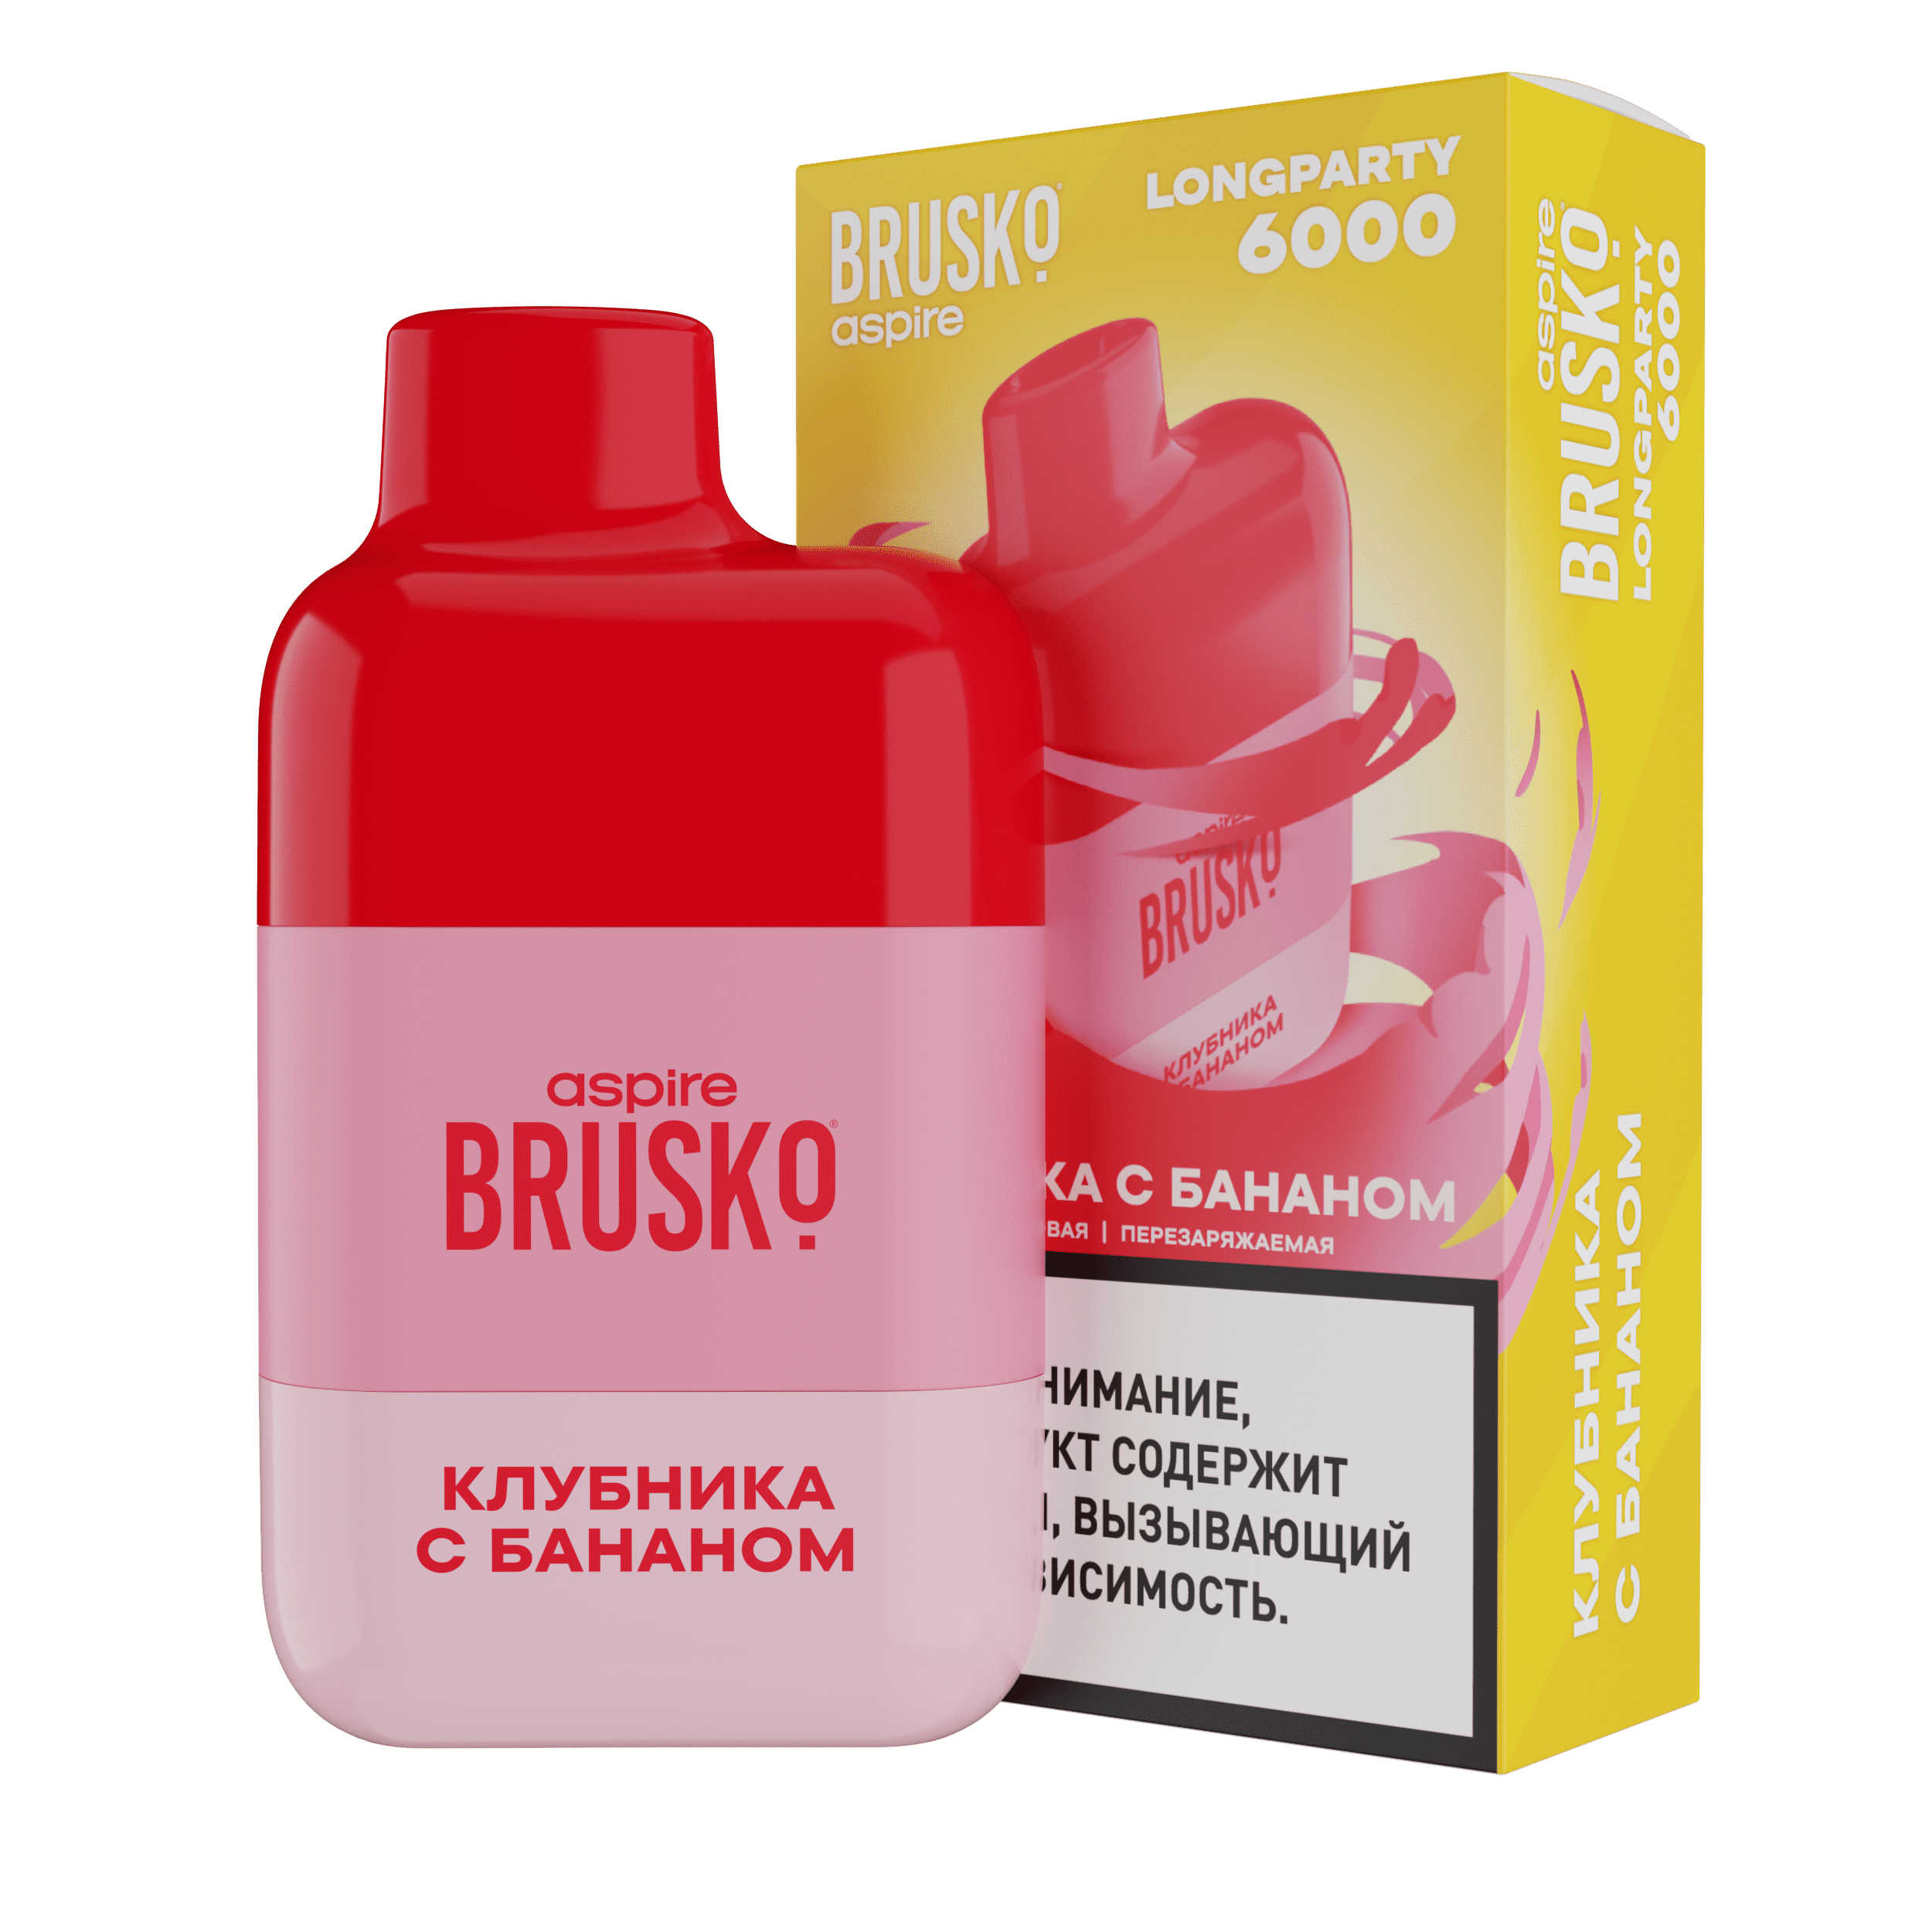 Одноразовая ЭСДН BRUSKO LONGPARTY 6000 с ароматом клубники с бананом, 20 мг/см3, 6 мл (М)